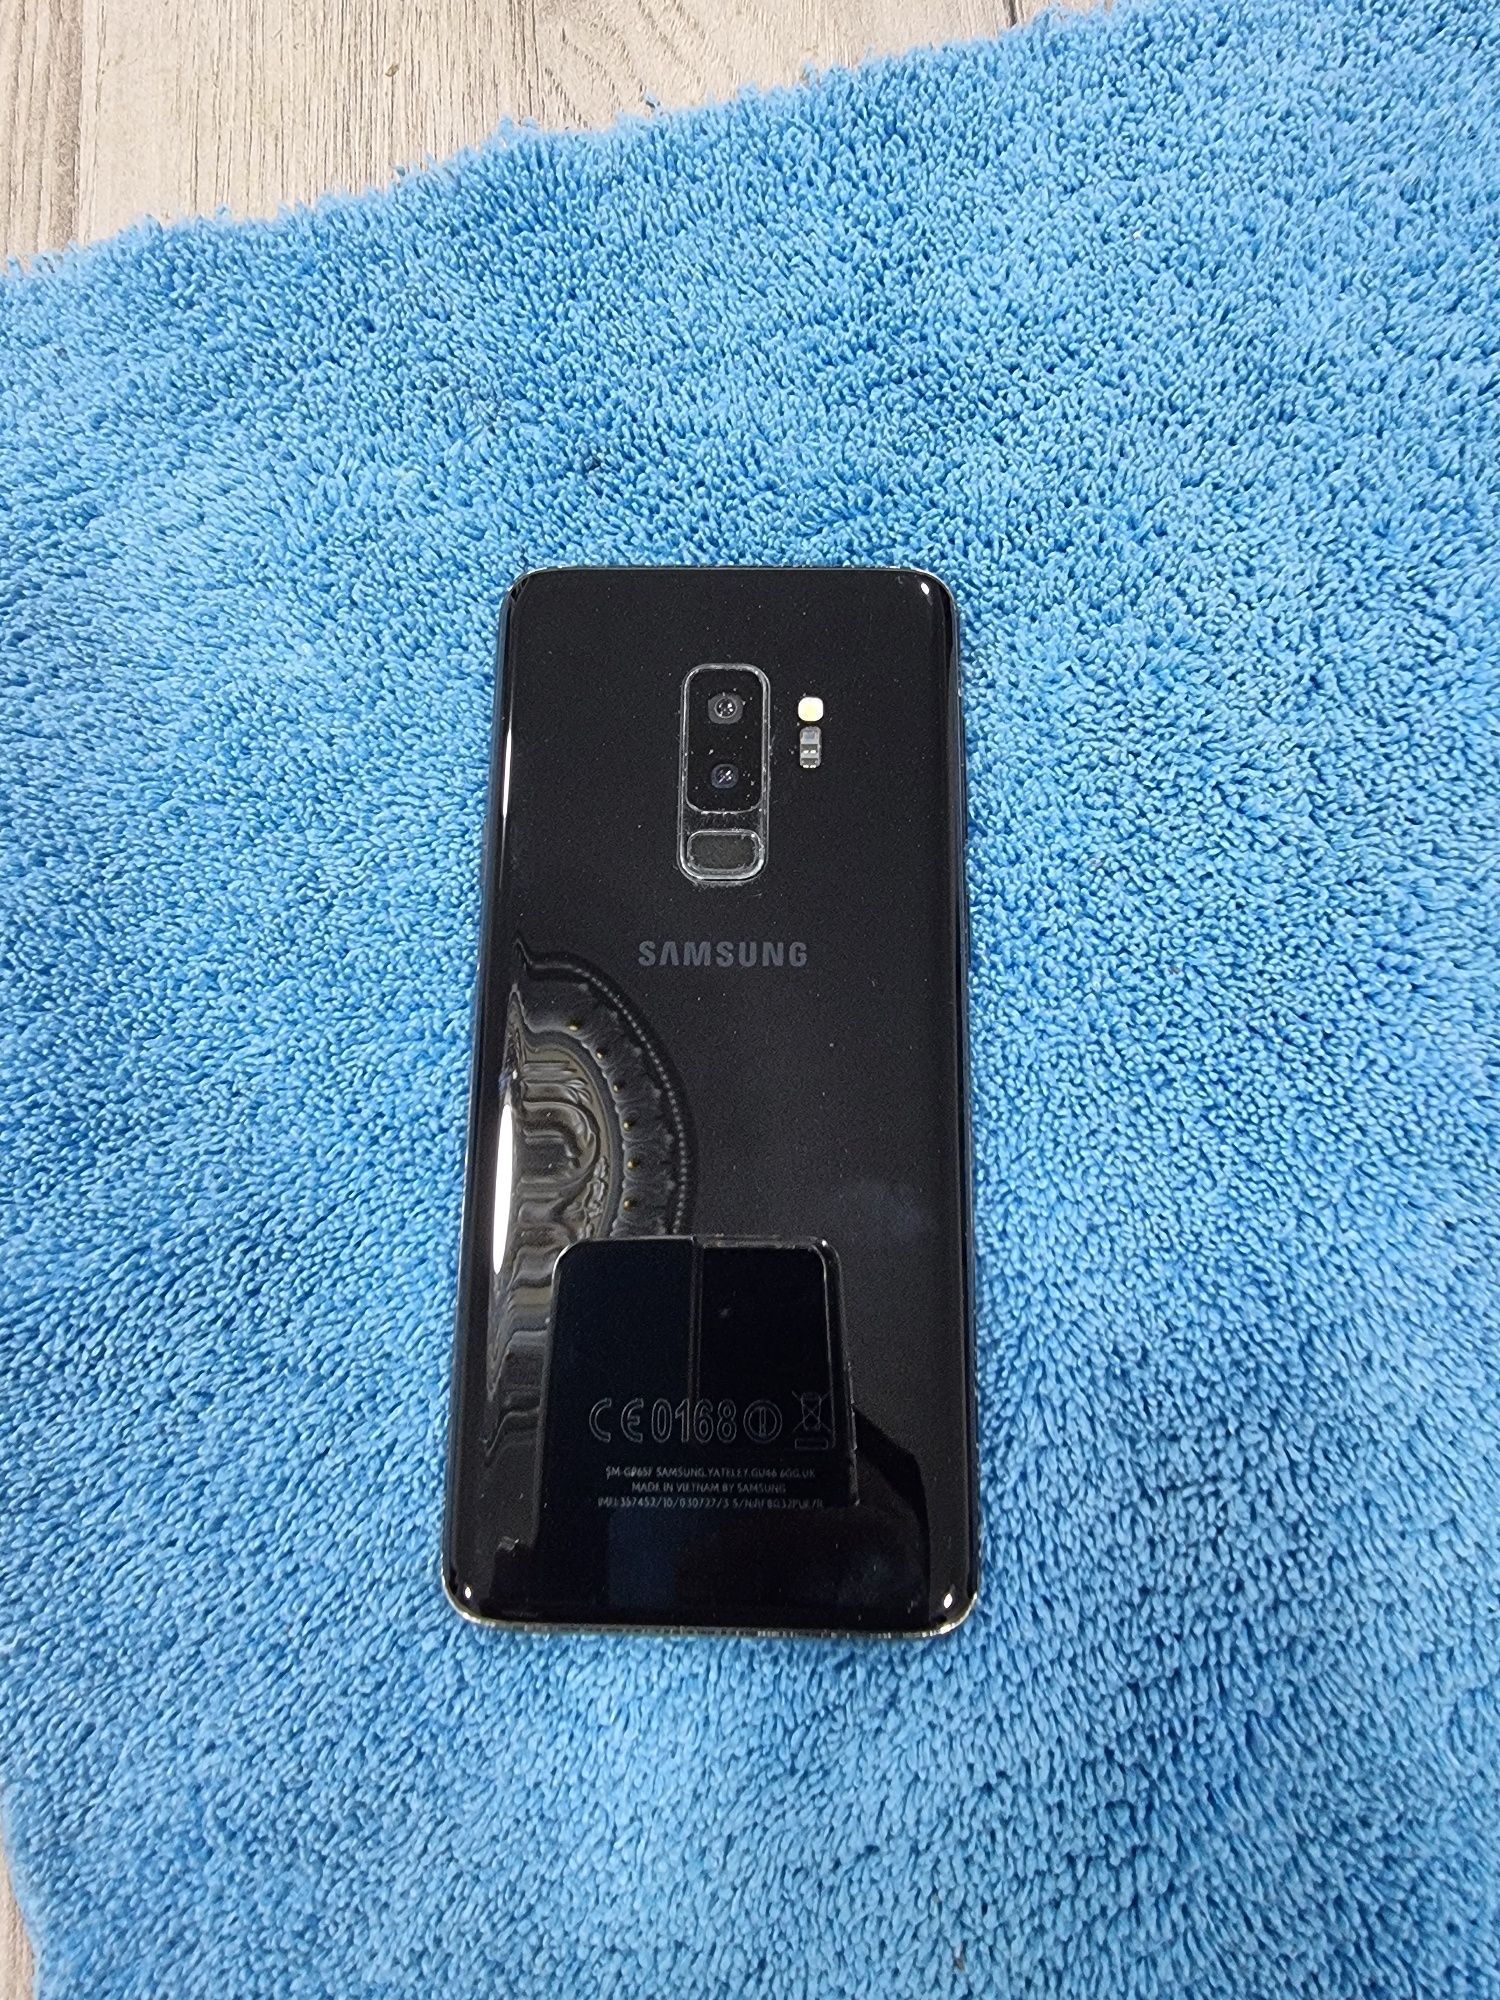 Samsung galaxy 9 s plus 6/64